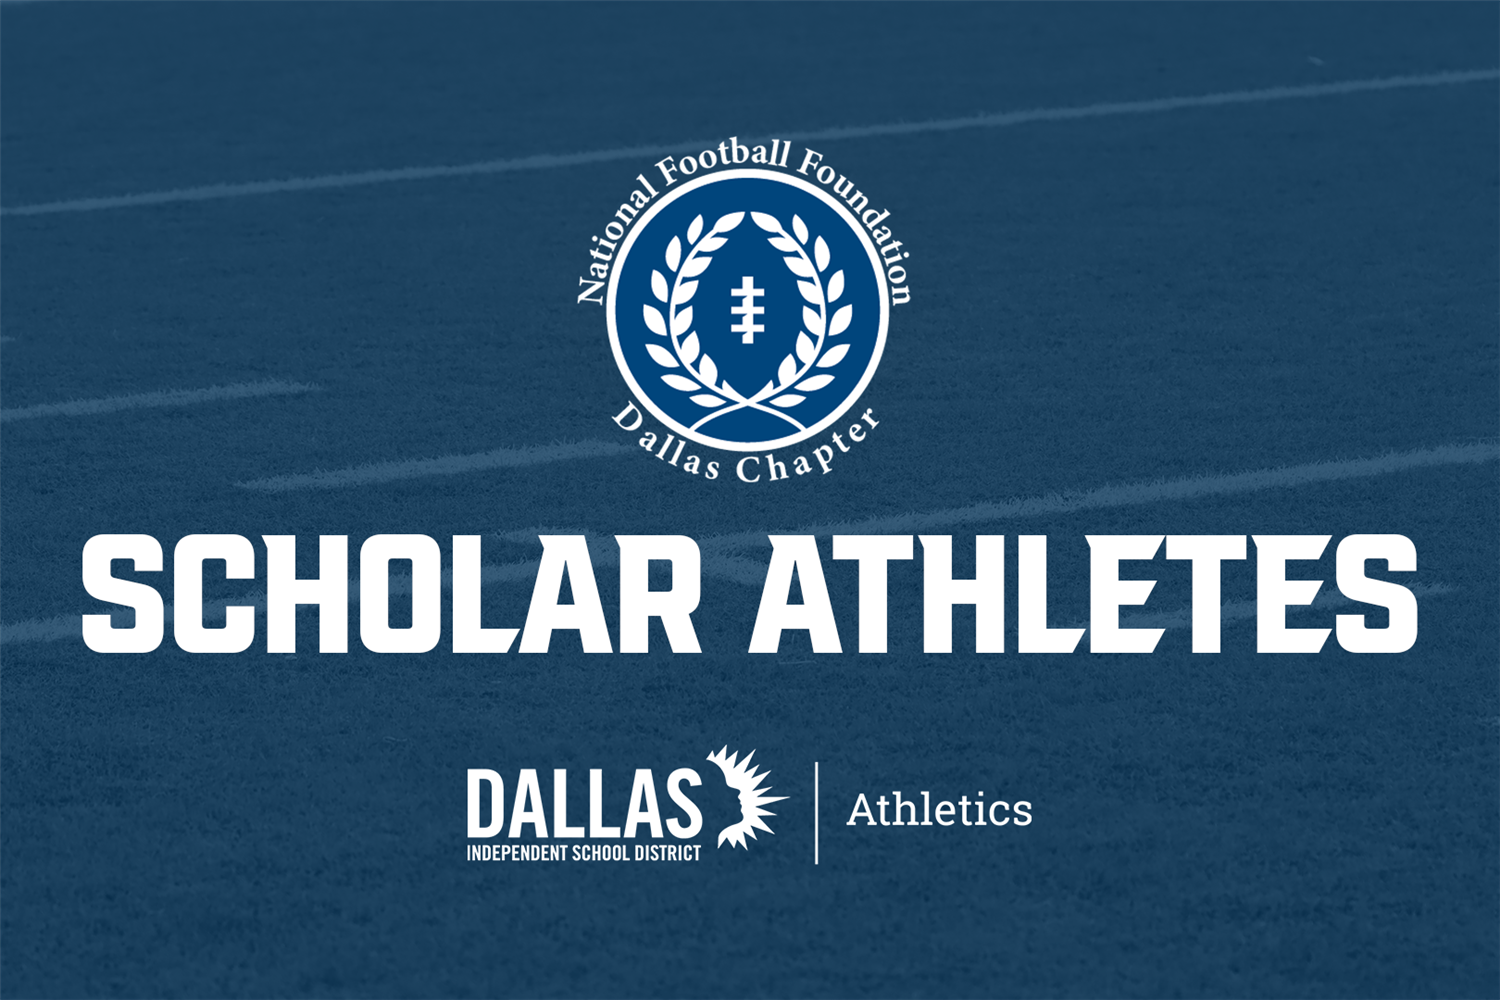  NFF Gridiron Club of Dallas will honor 17 Dallas ISD high school scholar-athletes